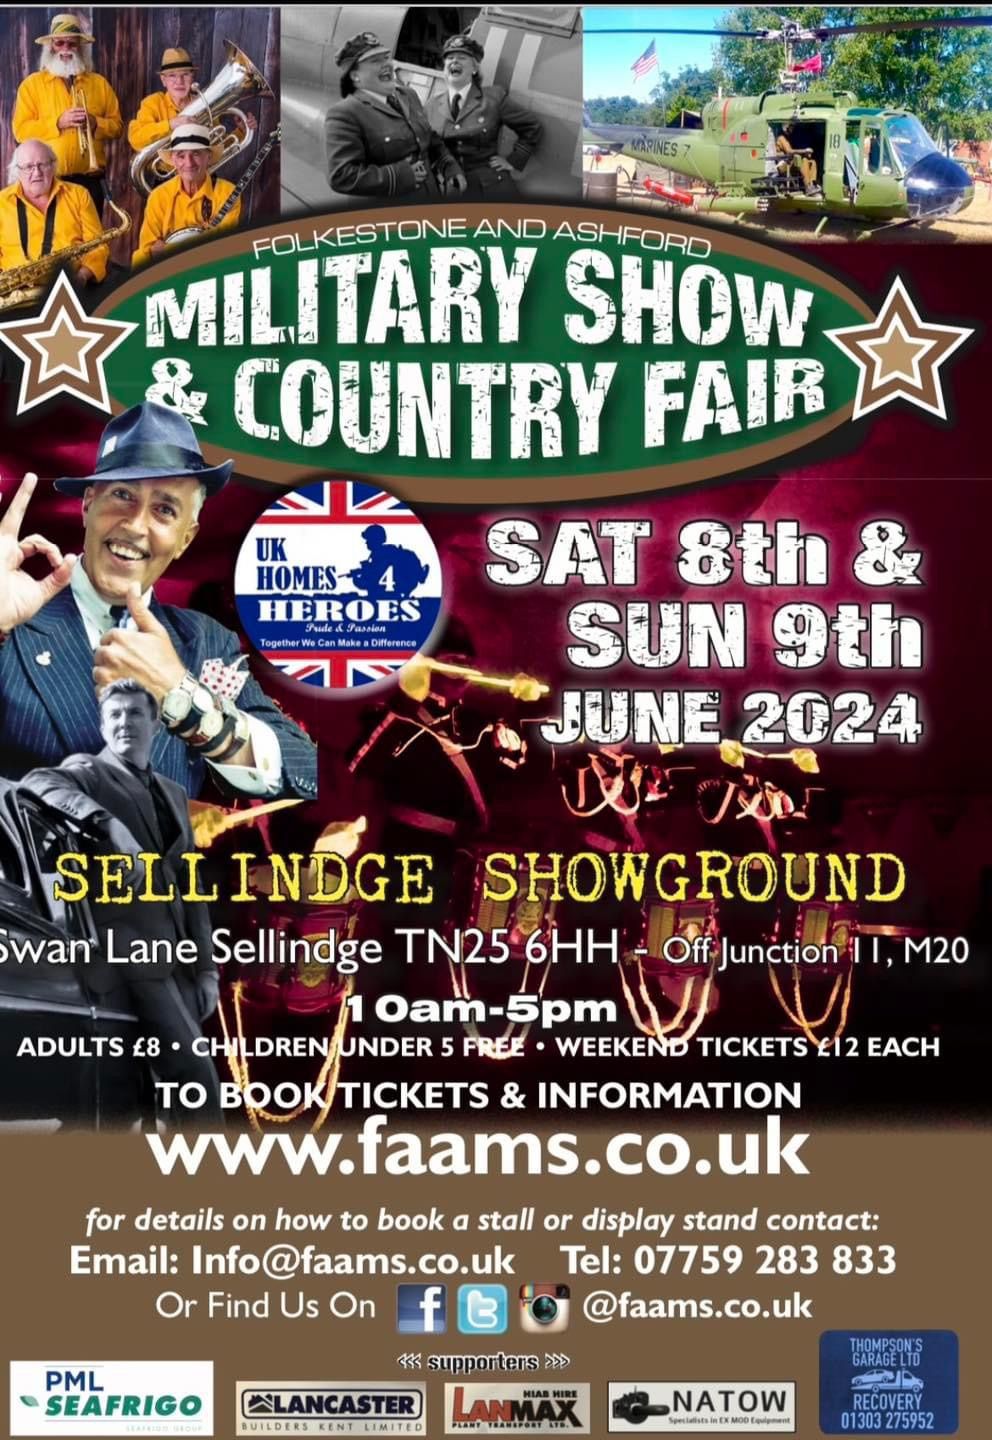 Folkestone and Ashford Military Show